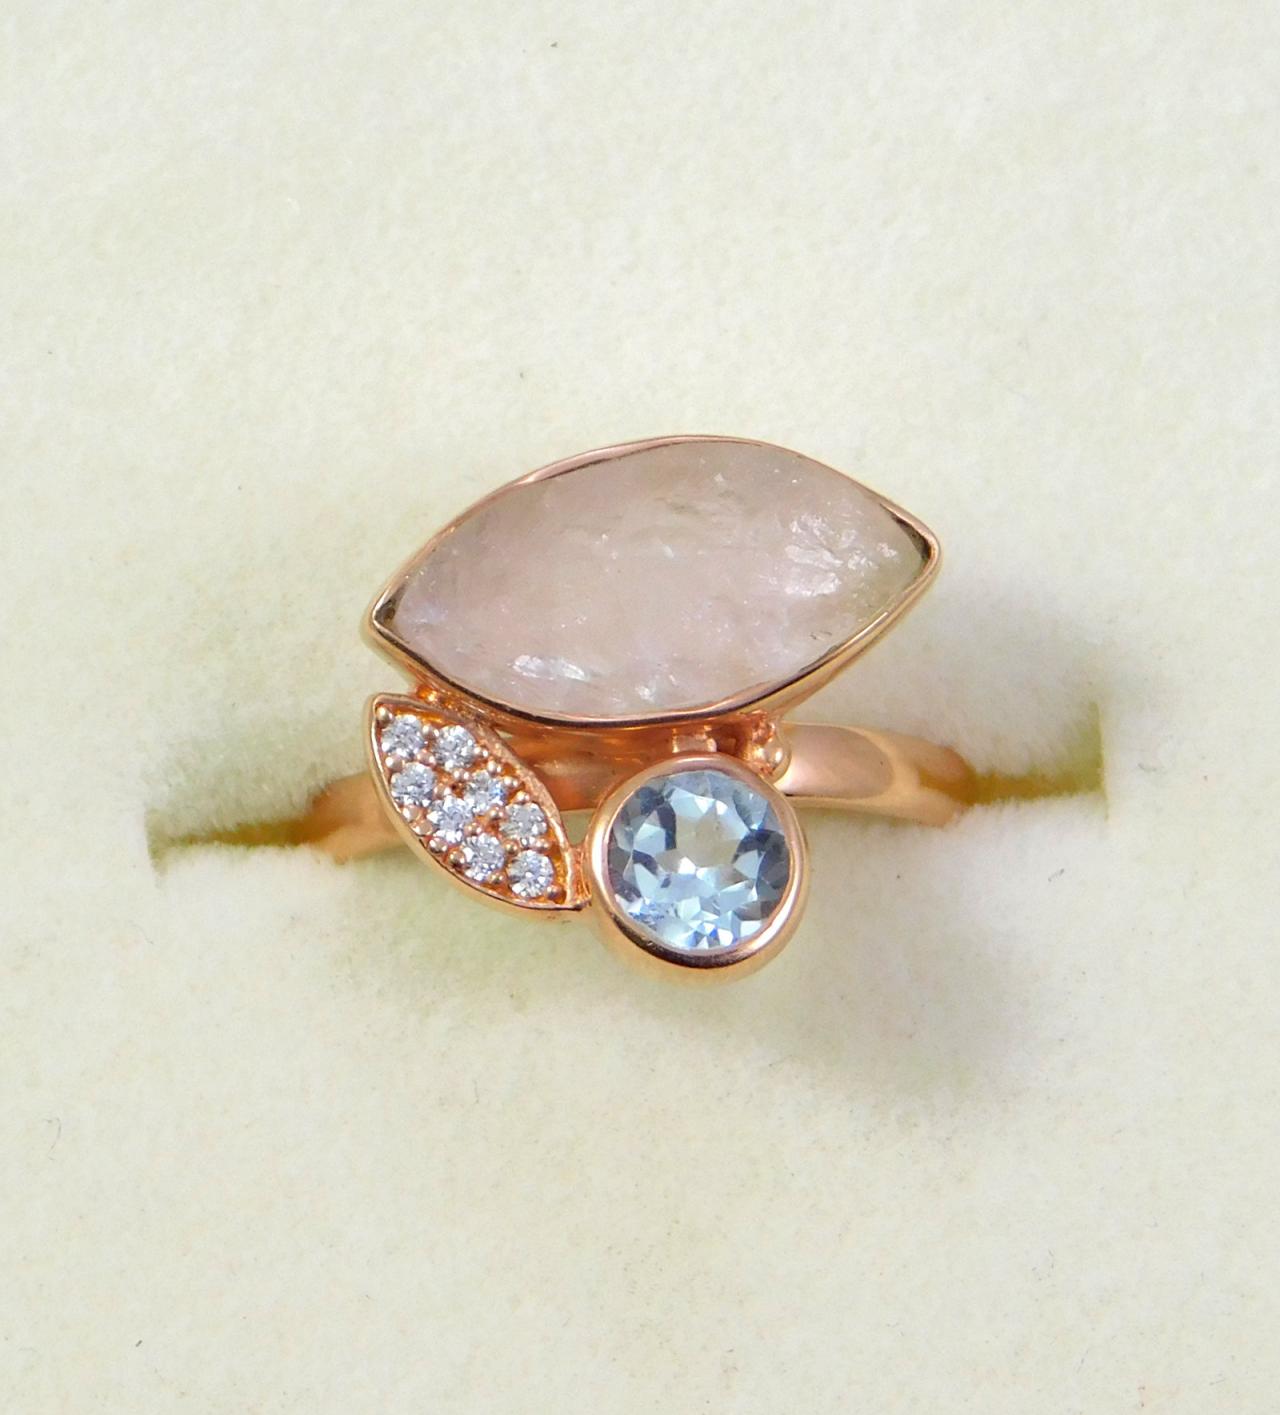 Stunning Spring Ring,rough Rose Quartz Blue Topaz Ring,solid 925 Sterling Silver Jewelry,lovely Handmade Designer Ring,wedding Gift, Mr1229